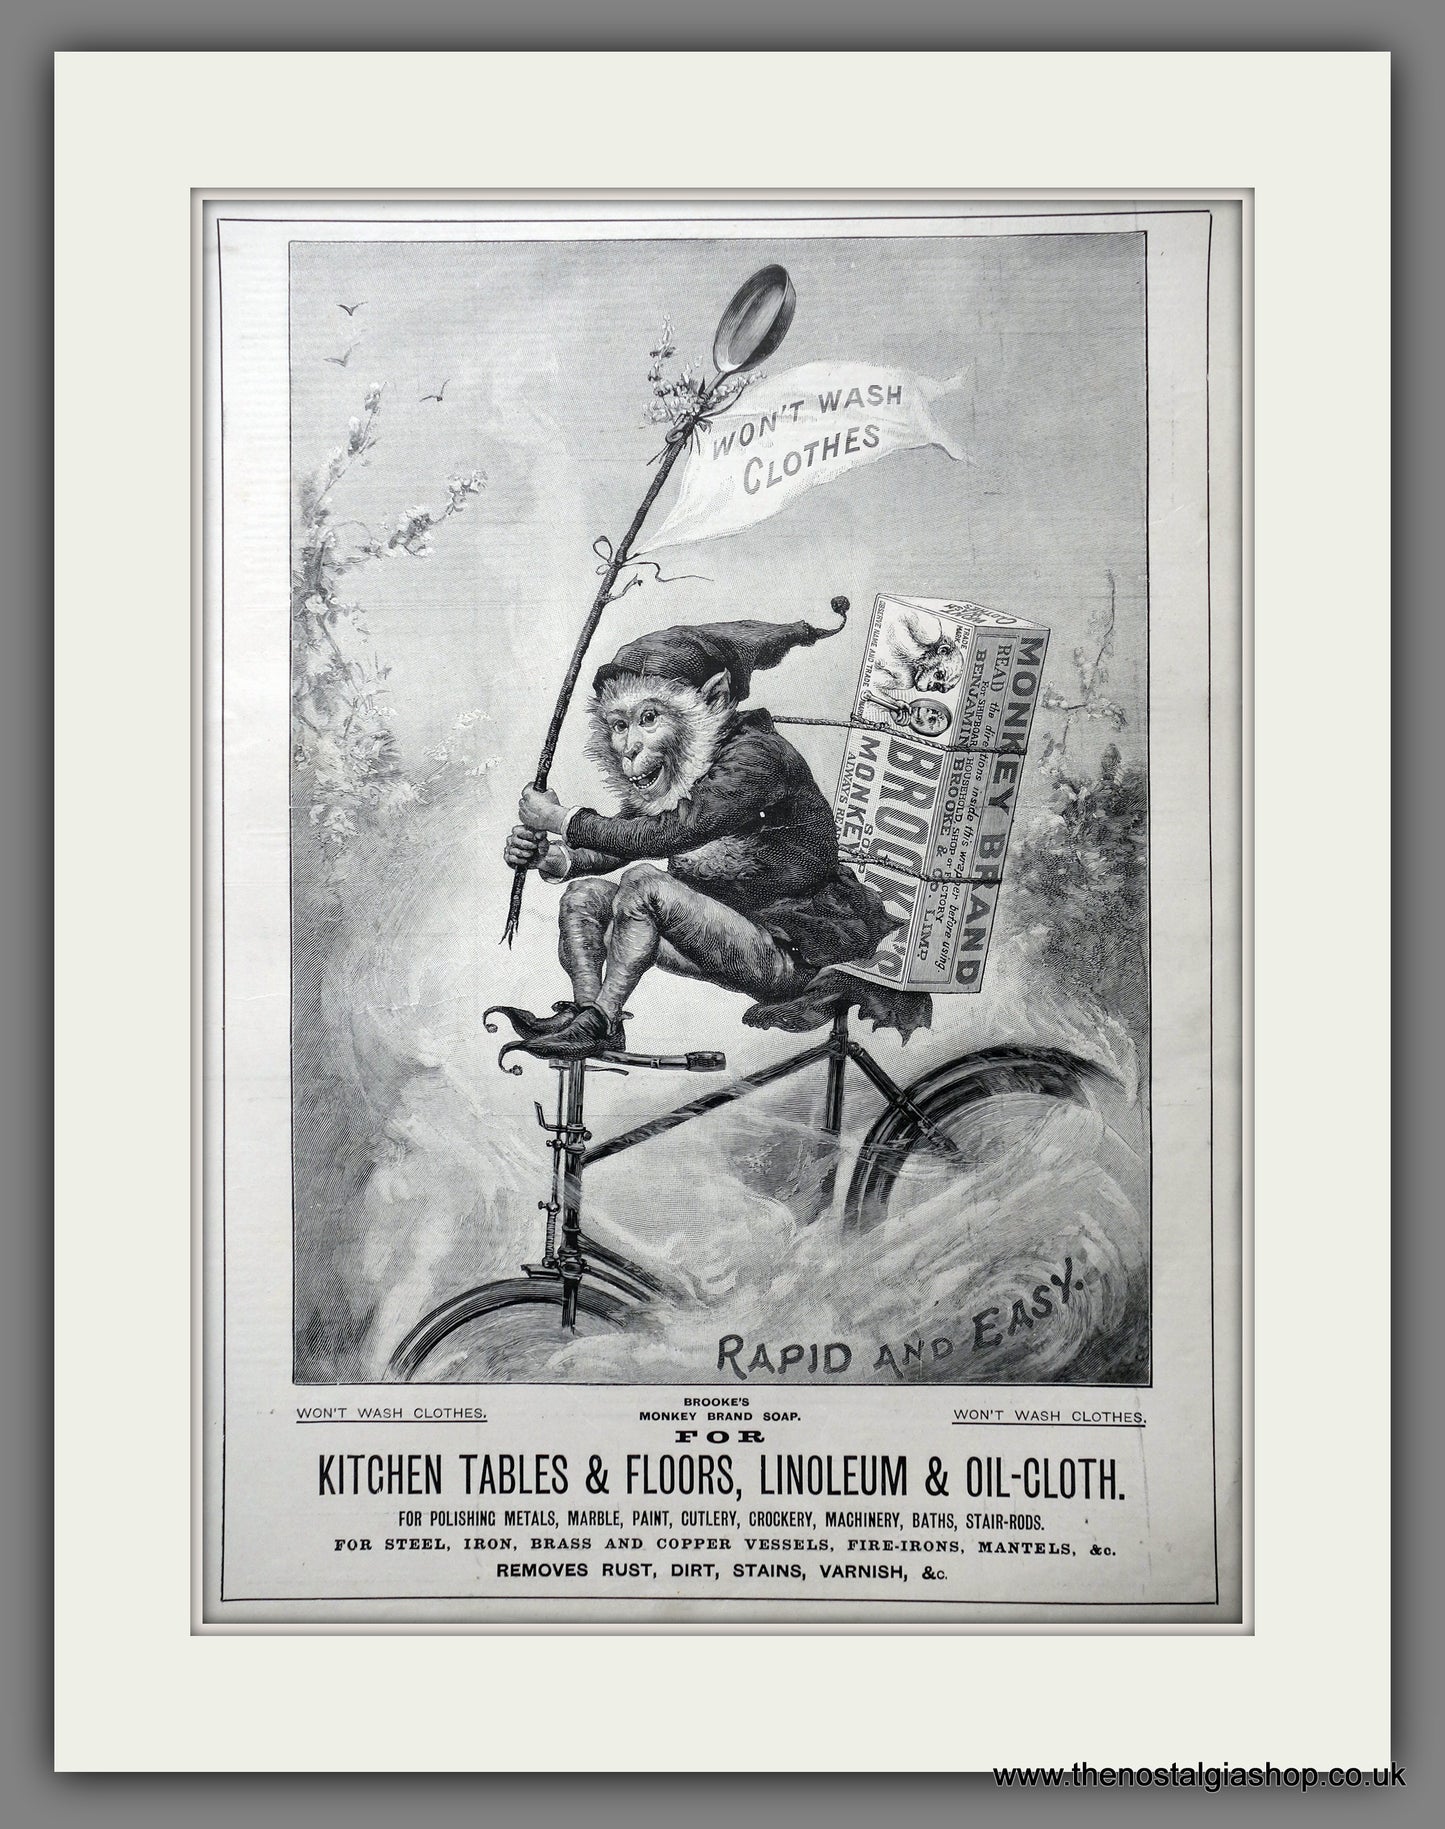 Monkey Brand Soap. Original Advert 1899 (ref AD15589)